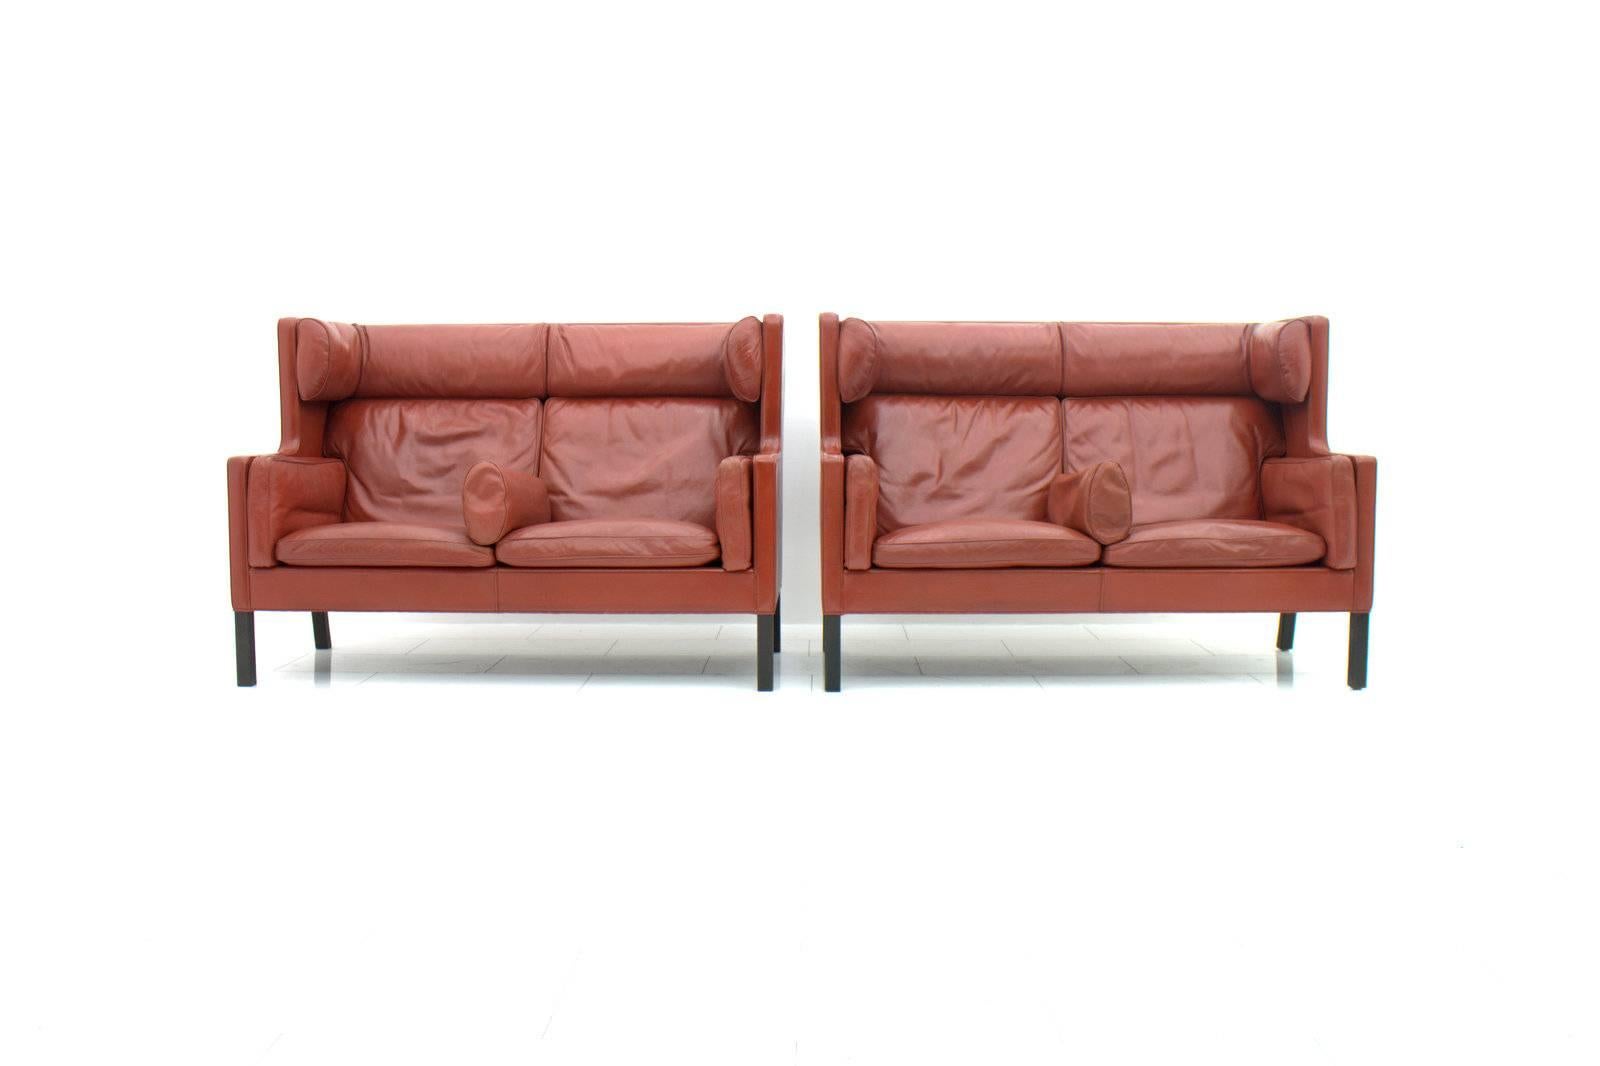 One of Two Børge Mogensen Coupe Leather Sofa, 2192, Frederica, Denmark 1971 (Skandinavische Moderne)